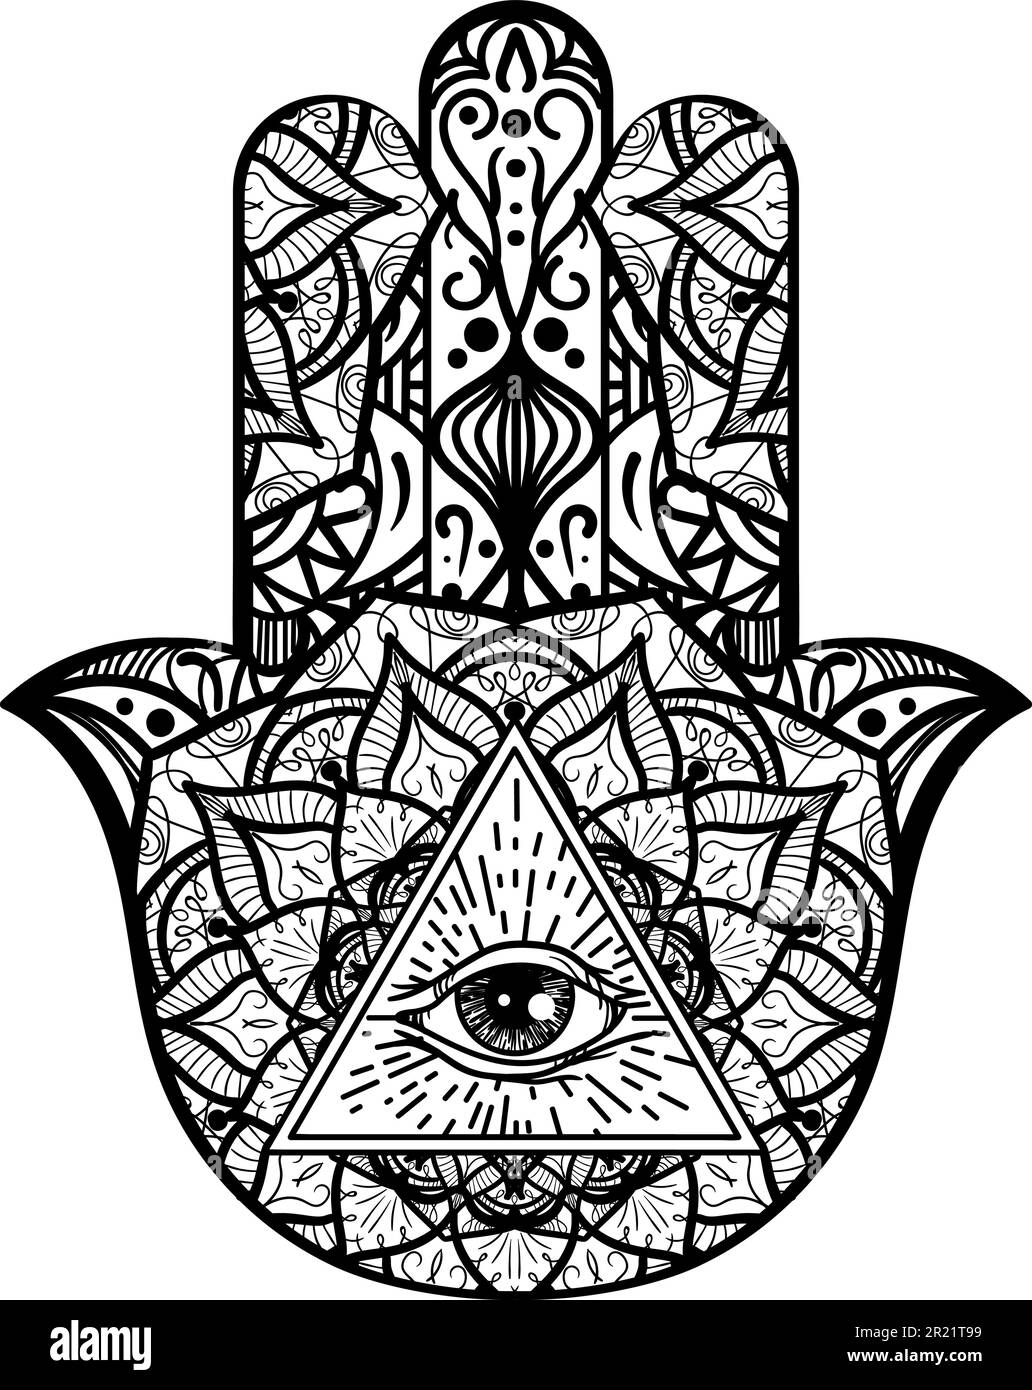 Hamsa symbol all seeing Eye inside human palm decorated with mystical ...